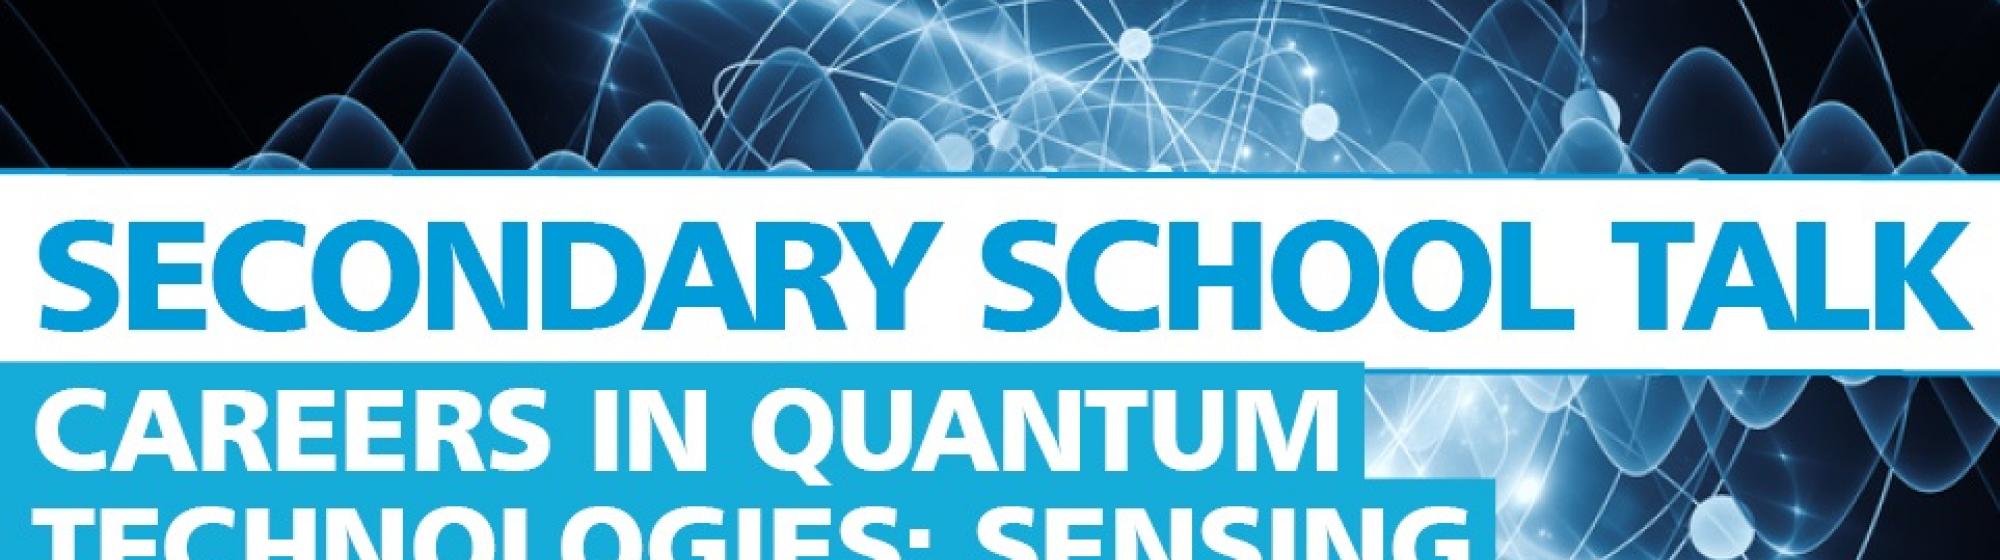 Secondary School Talk -  Careers in Quantum Technologies: Sensing